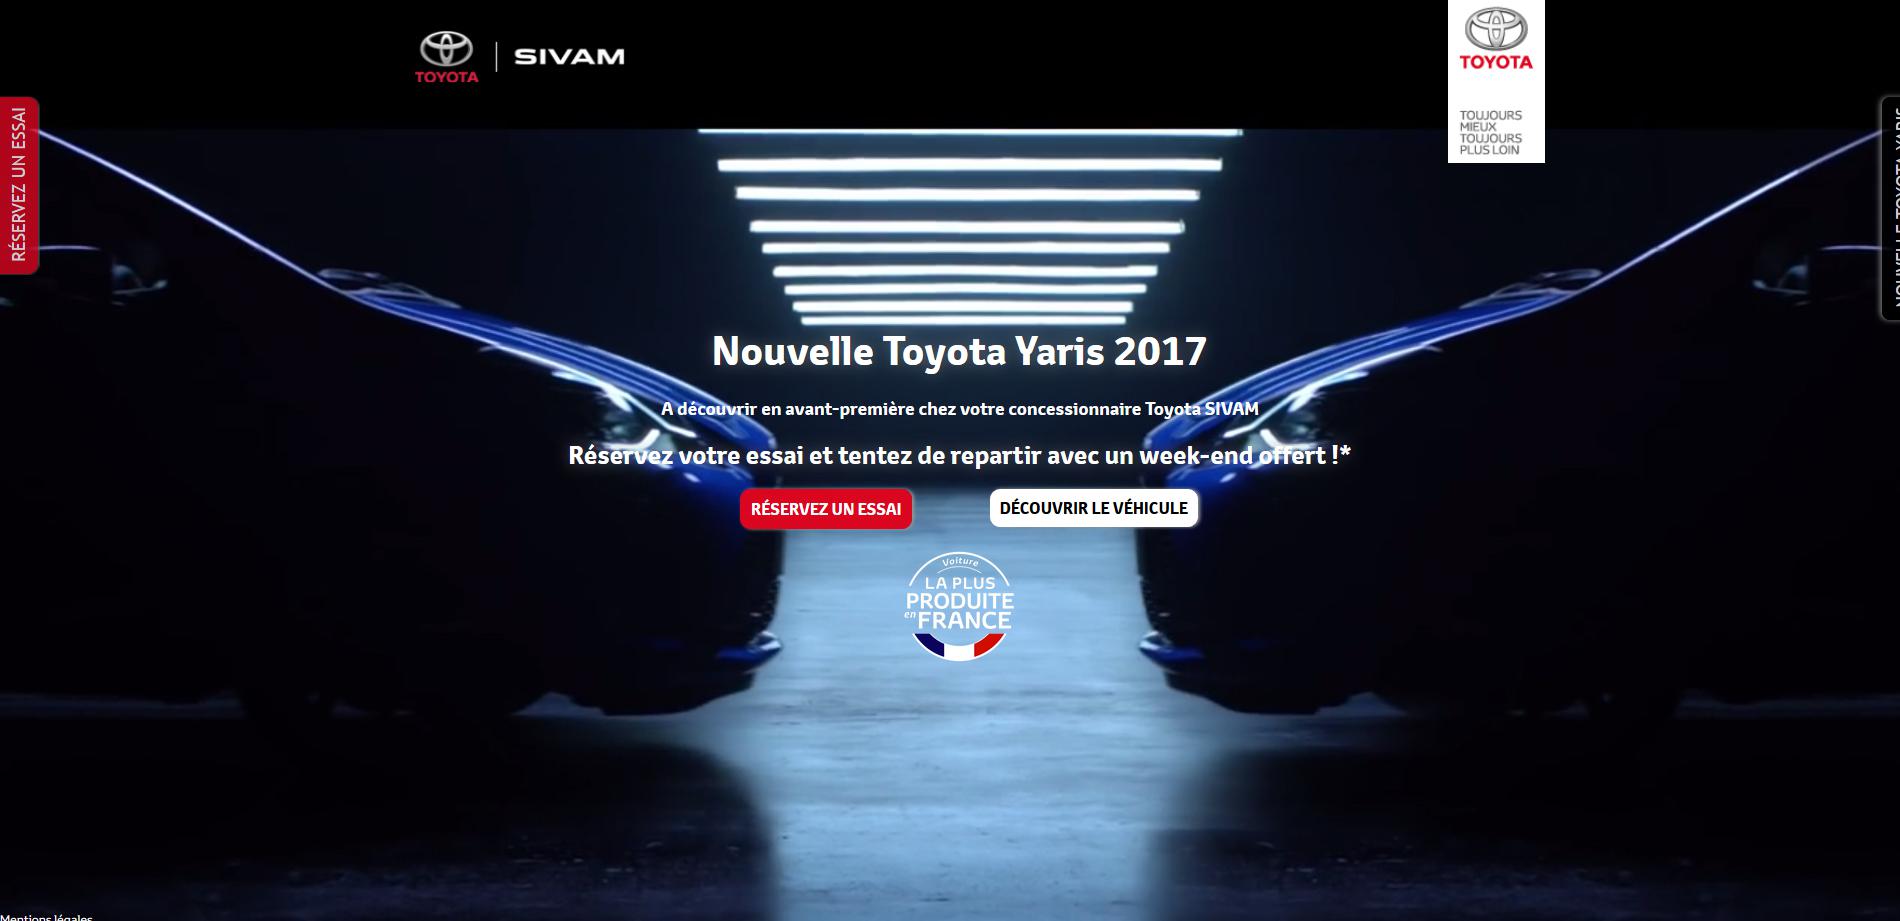 SIVAM - NOUVELLE TOYOTA YARIS 2017